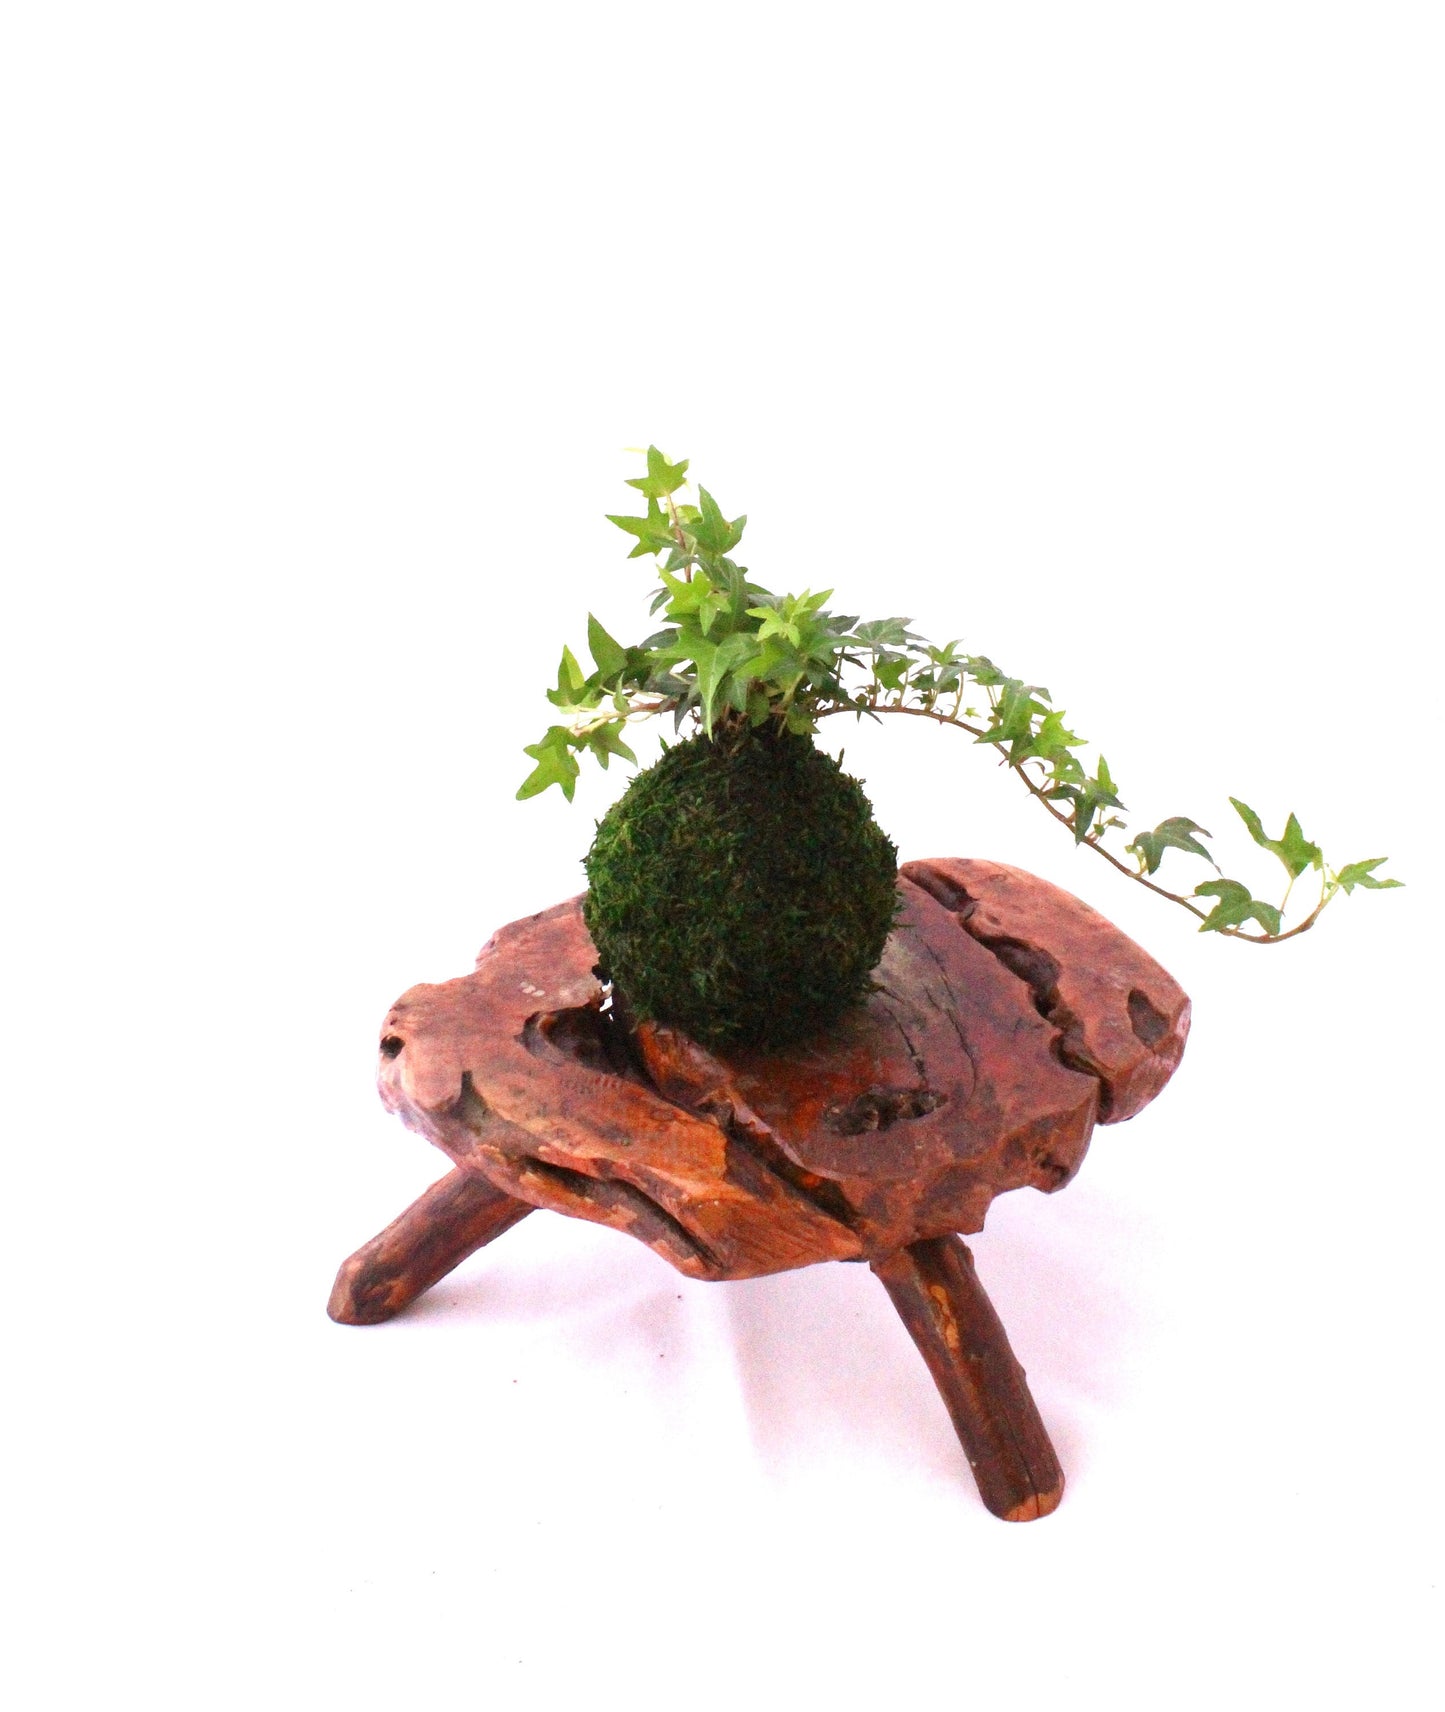 Mini Ivy Kokedama - Japanese botanical art, moss-ball with live ivy plant.